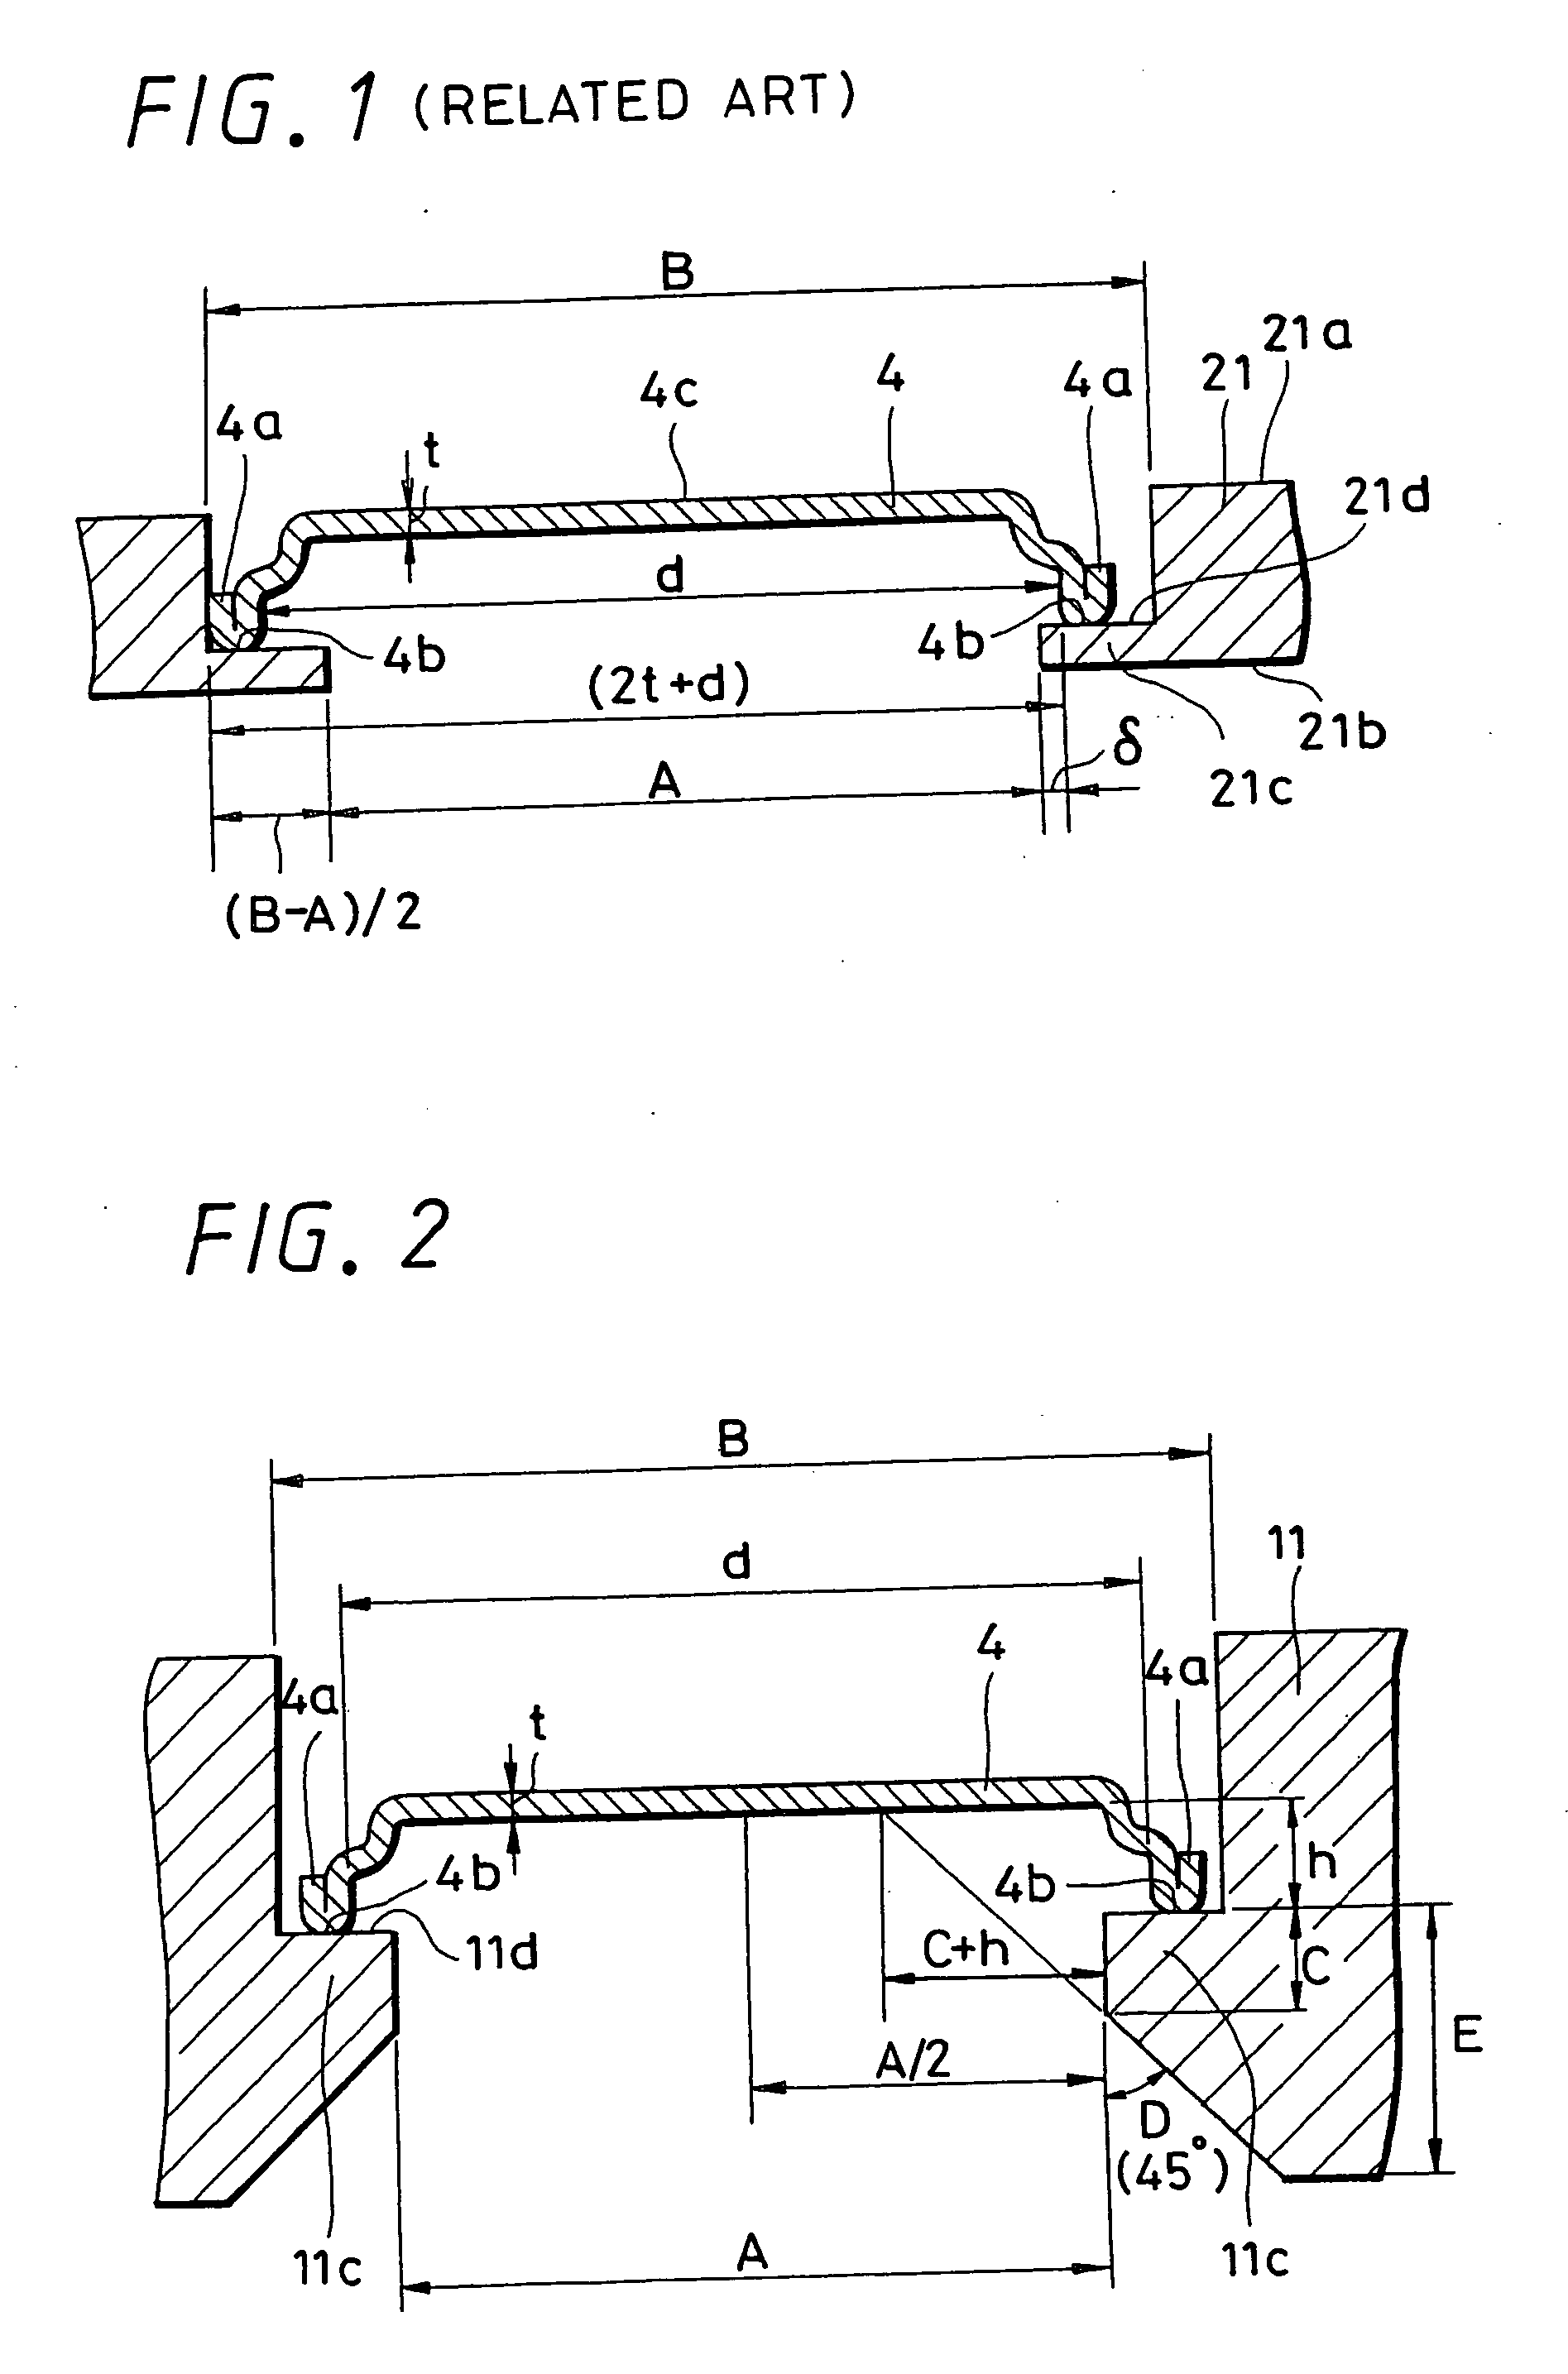 Method for manufacturing alkaline battery